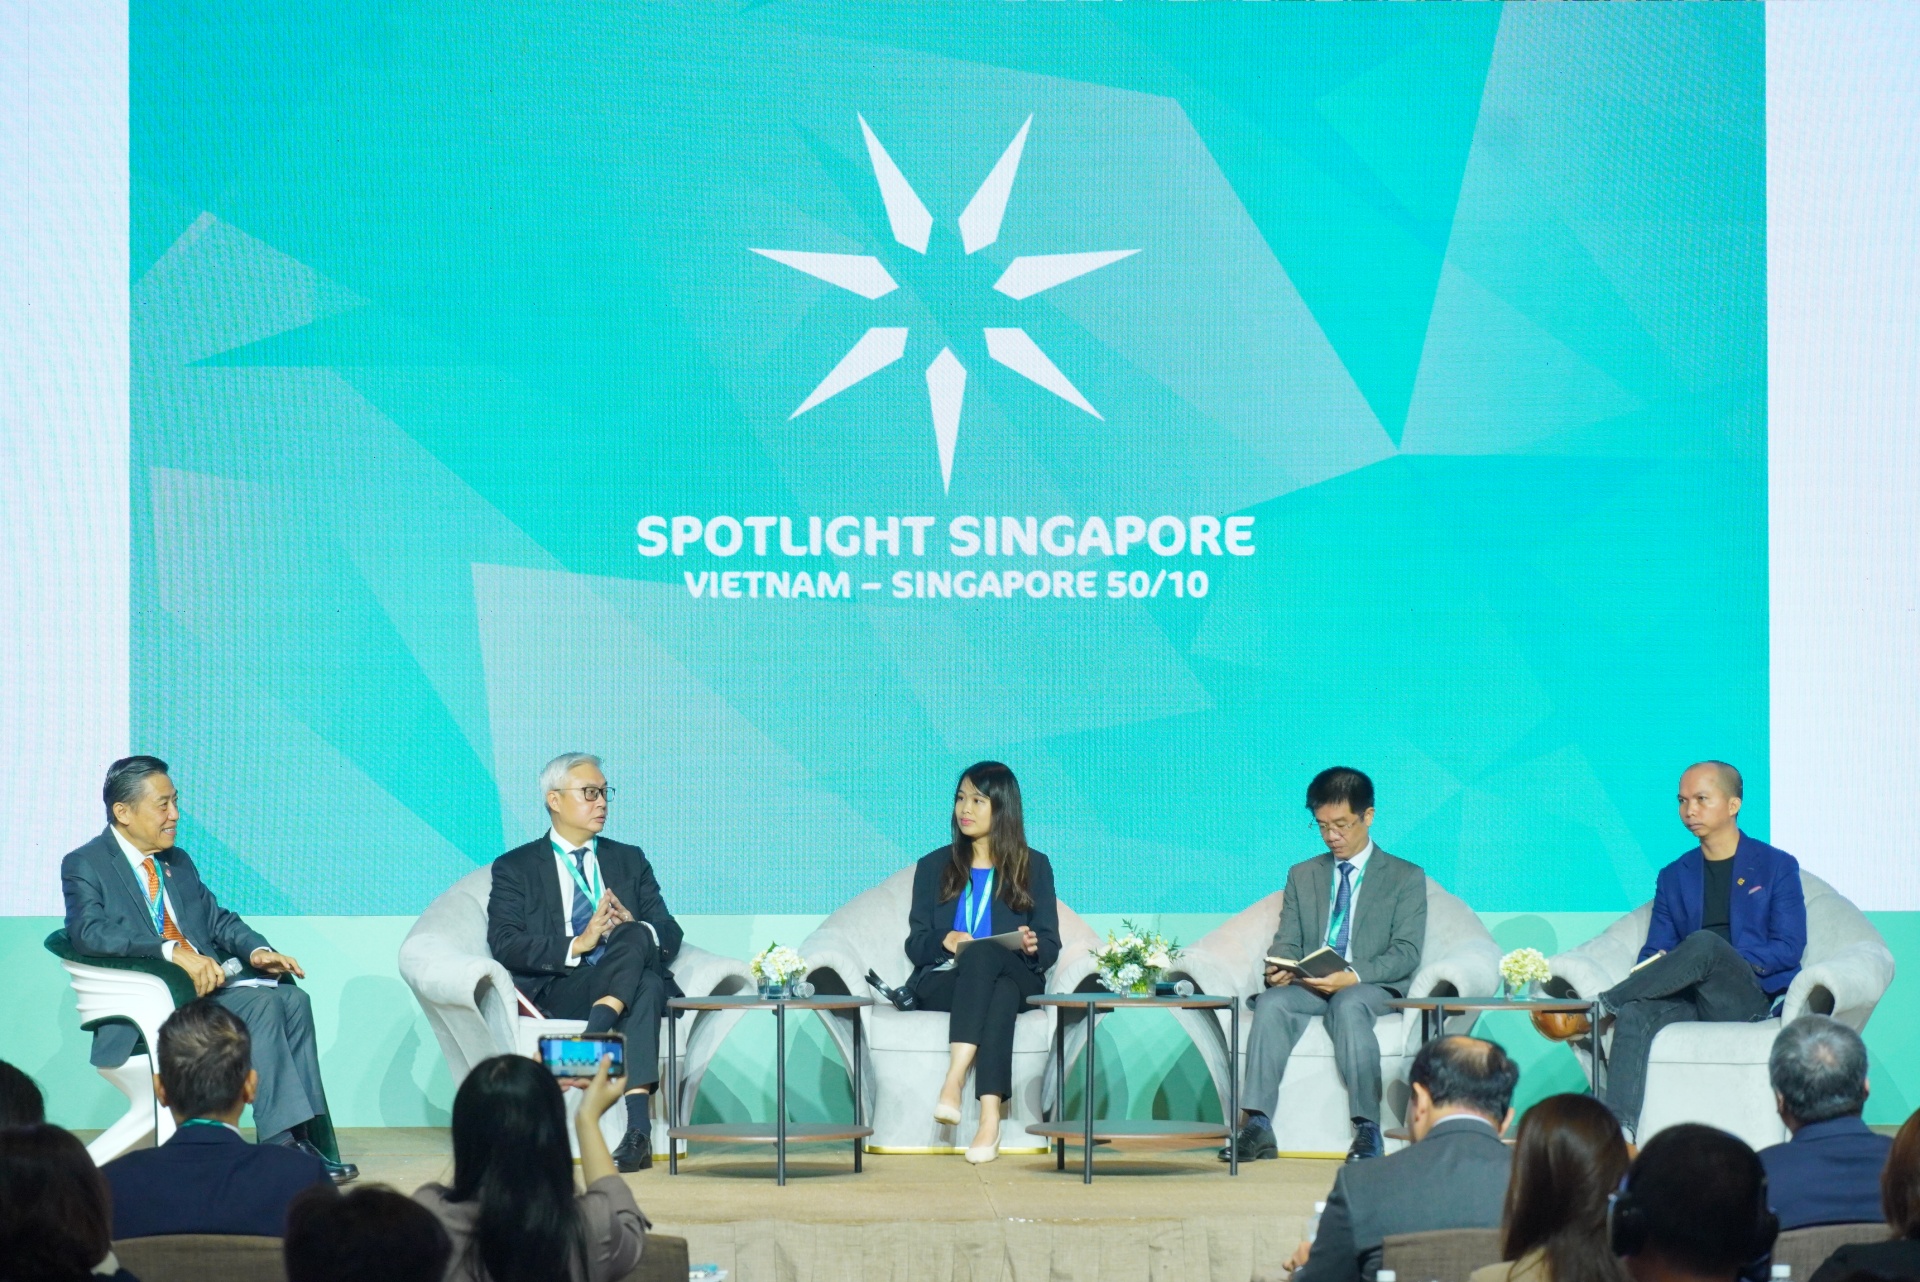 Singapore-Vietnam Spotlight 2023: A focus on youth and entrepreneurship